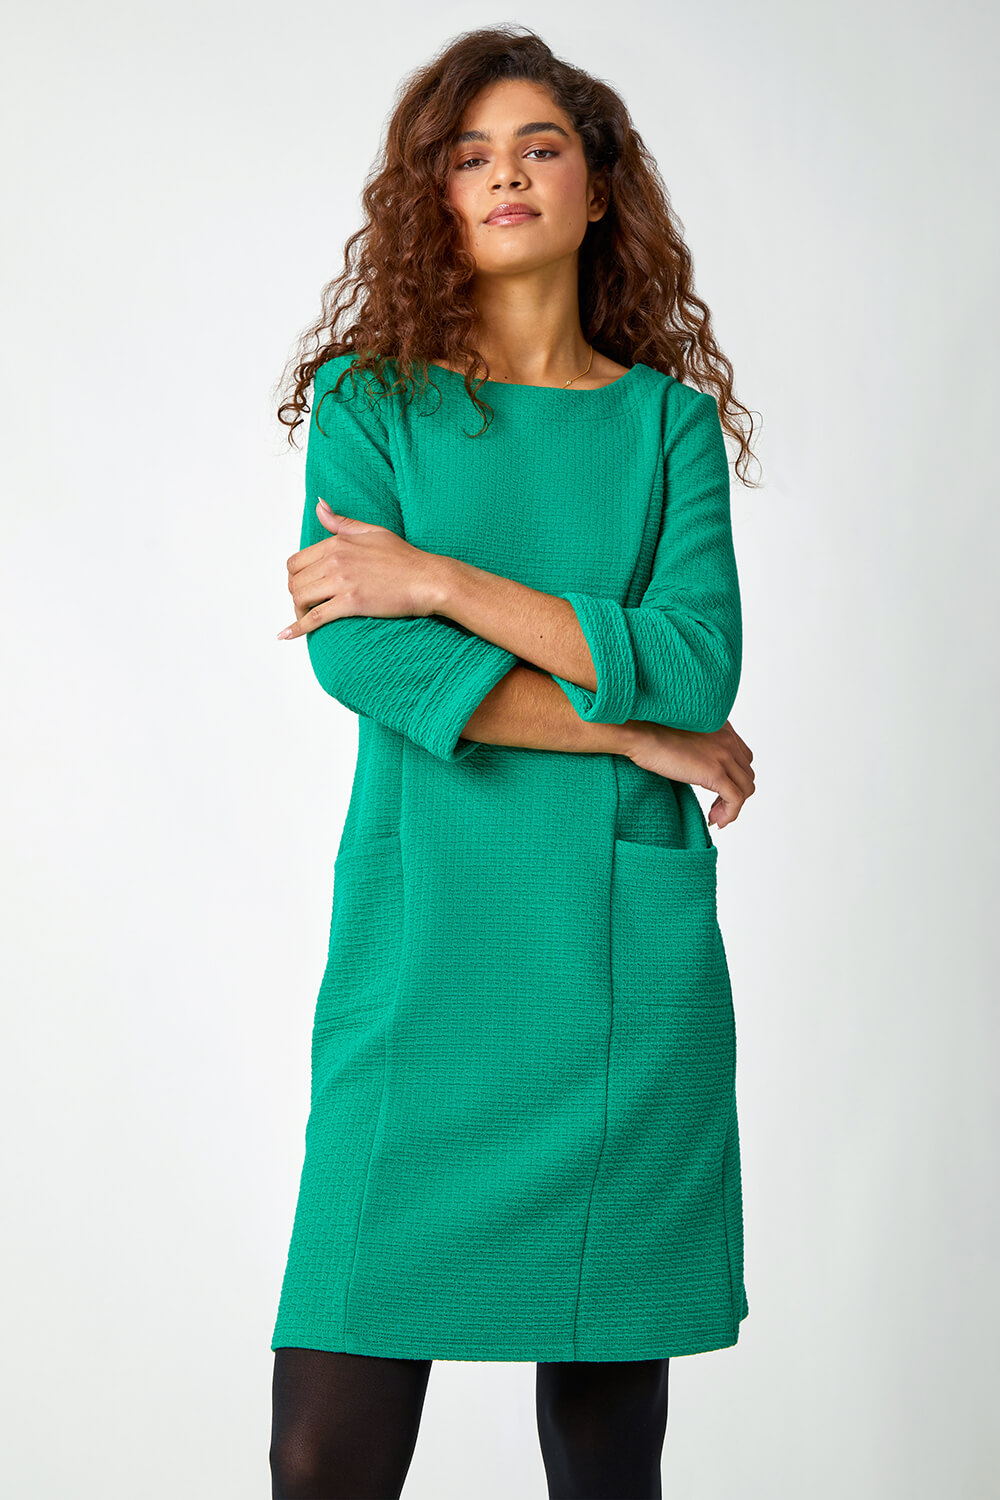 Green Textured Pocket Cotton Blend Shift Dress, Image 1 of 5